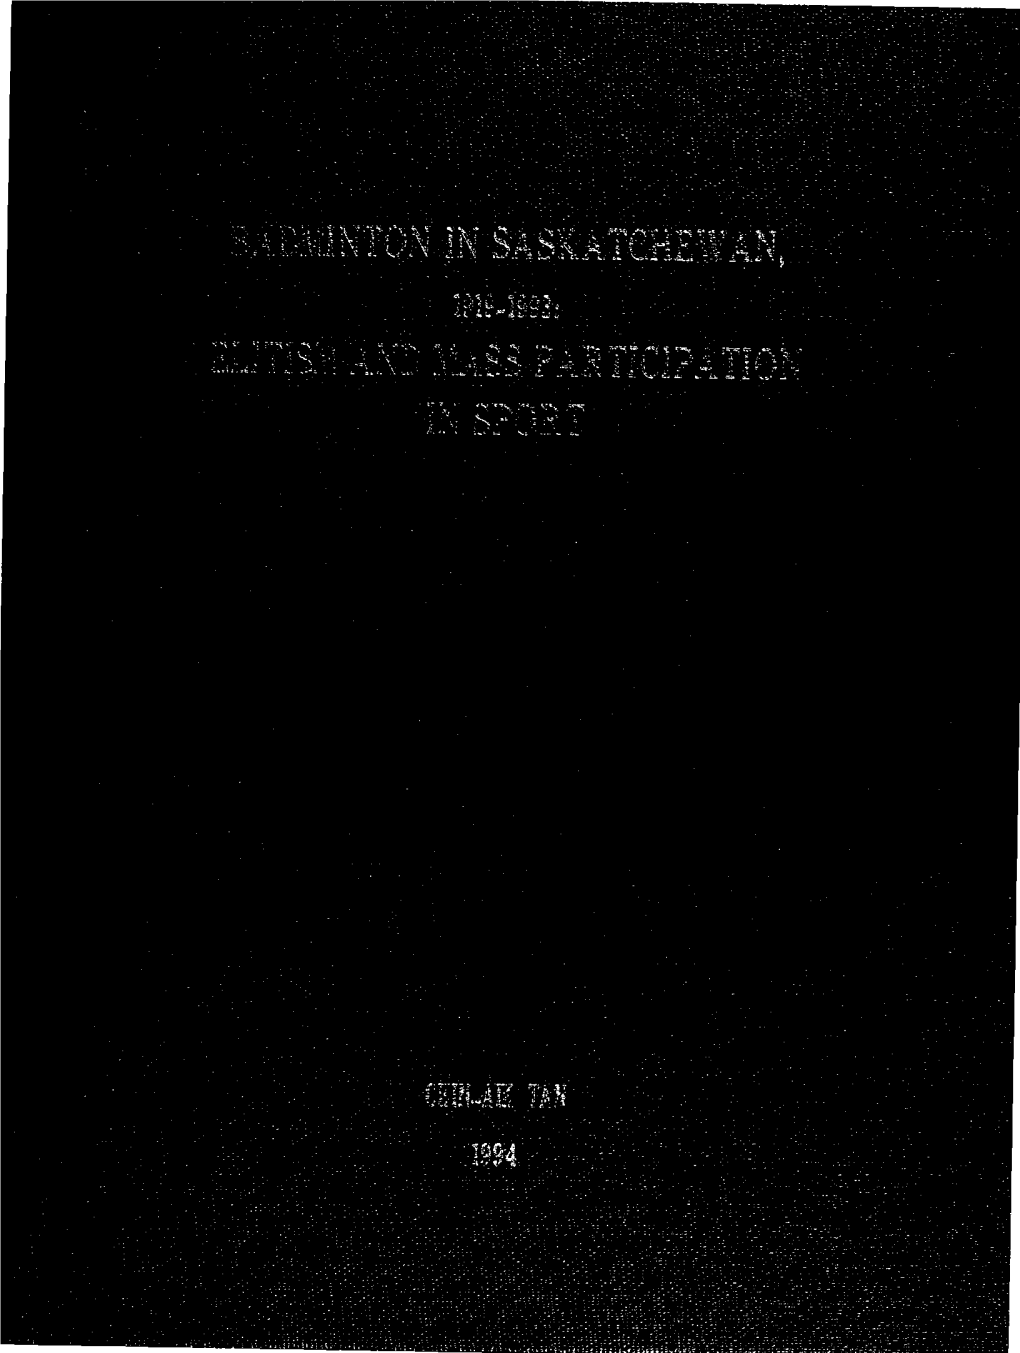 Badminton in Saskatchewan, 1919-1993